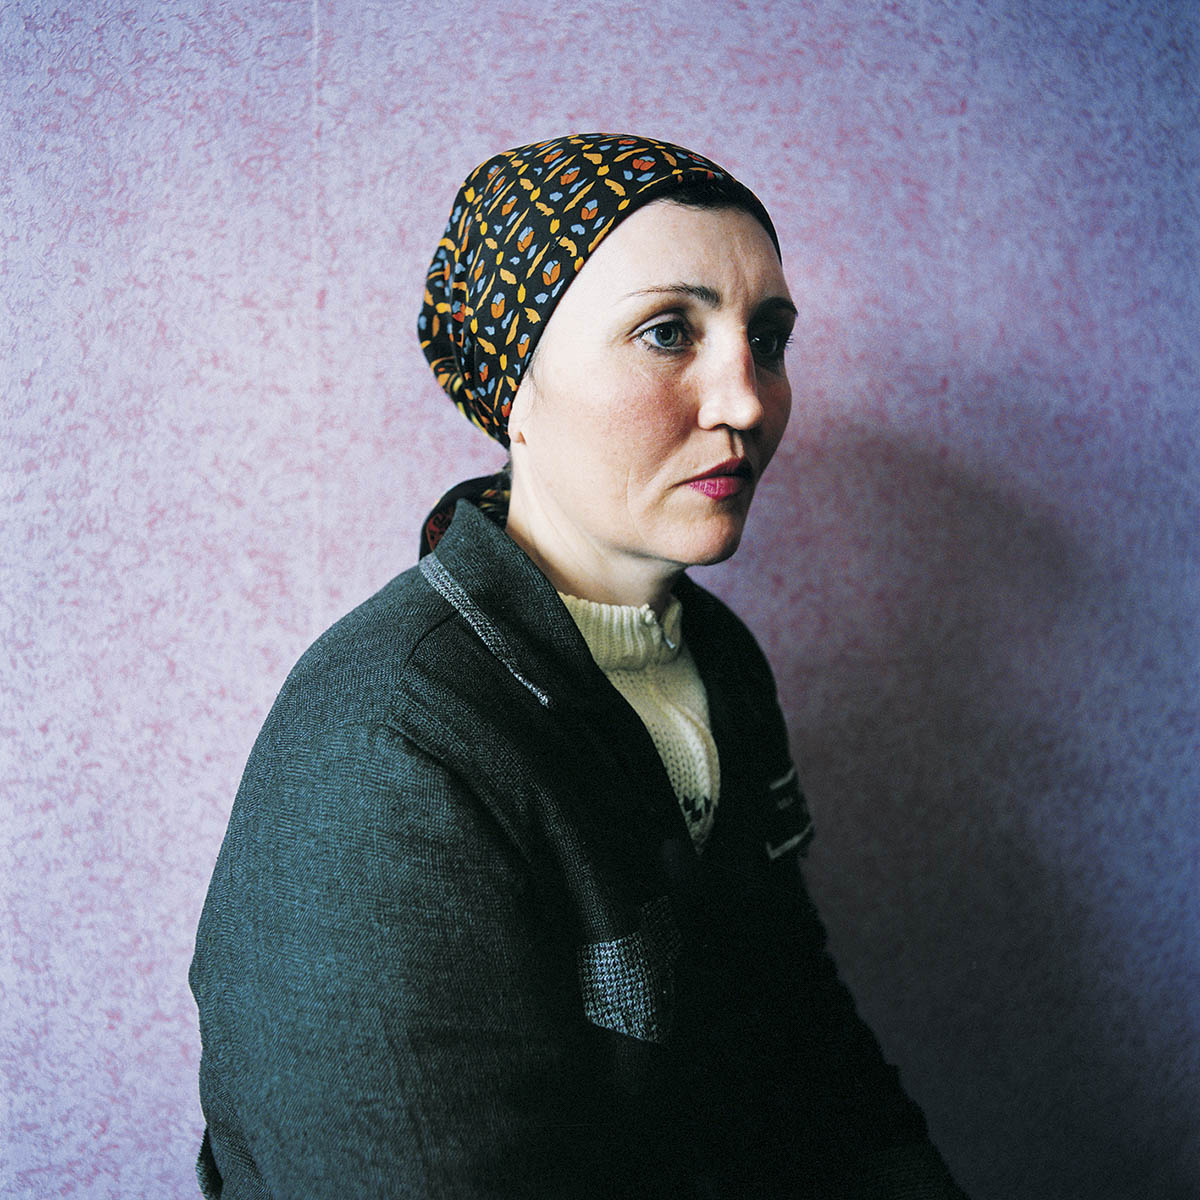 Ira, Women's Prison, Ukraine 2009